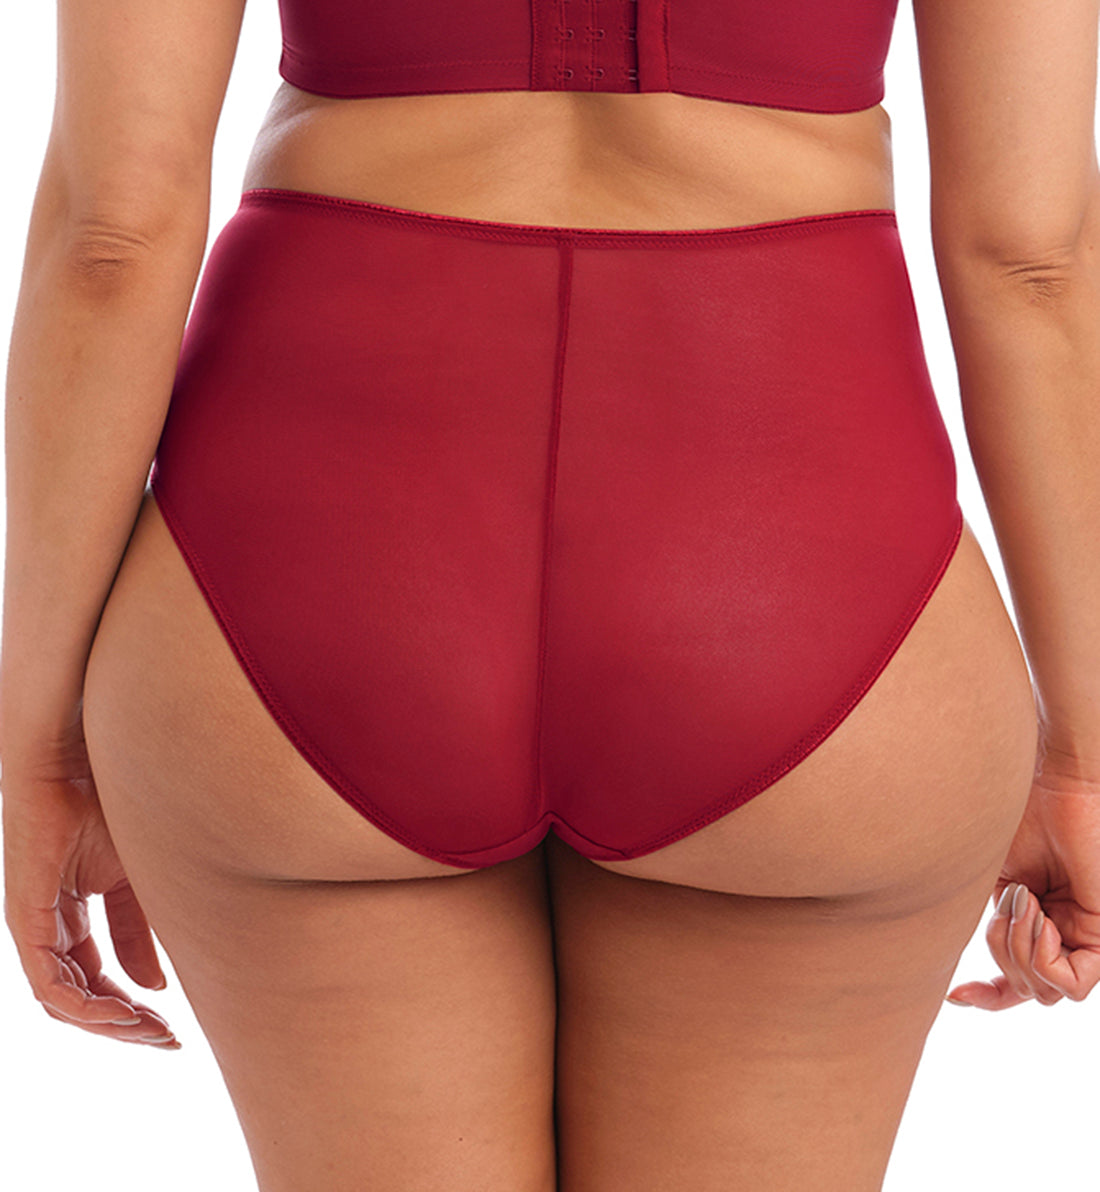 Elomi Matilda Matching Full Panty Brief (8906),Large,Crimson - Crimson,Large